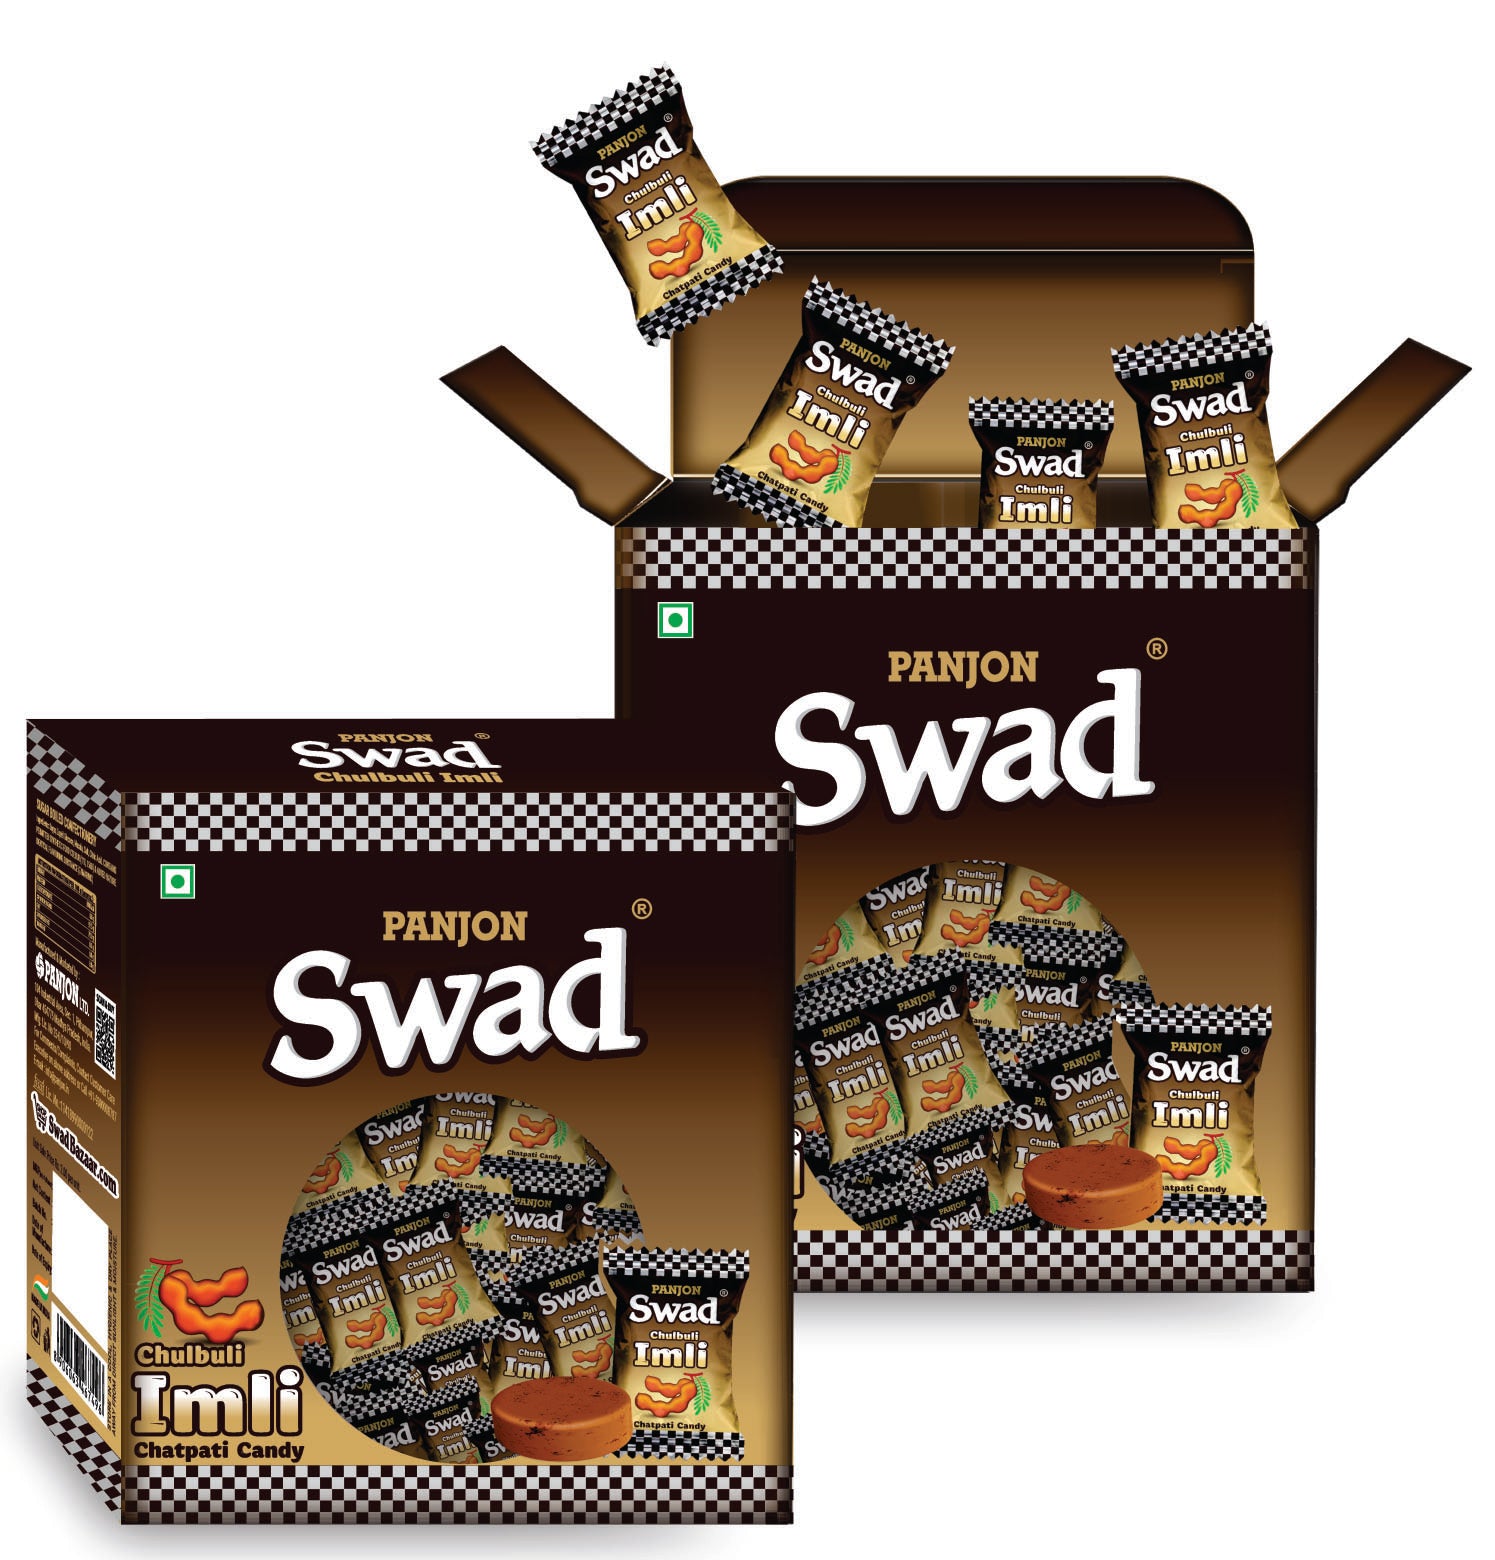 Swad Gift Box, Chulbuli Imli Candy (Imlee Masala Flavour Pop) 125 Toffee x 2 Box Pack